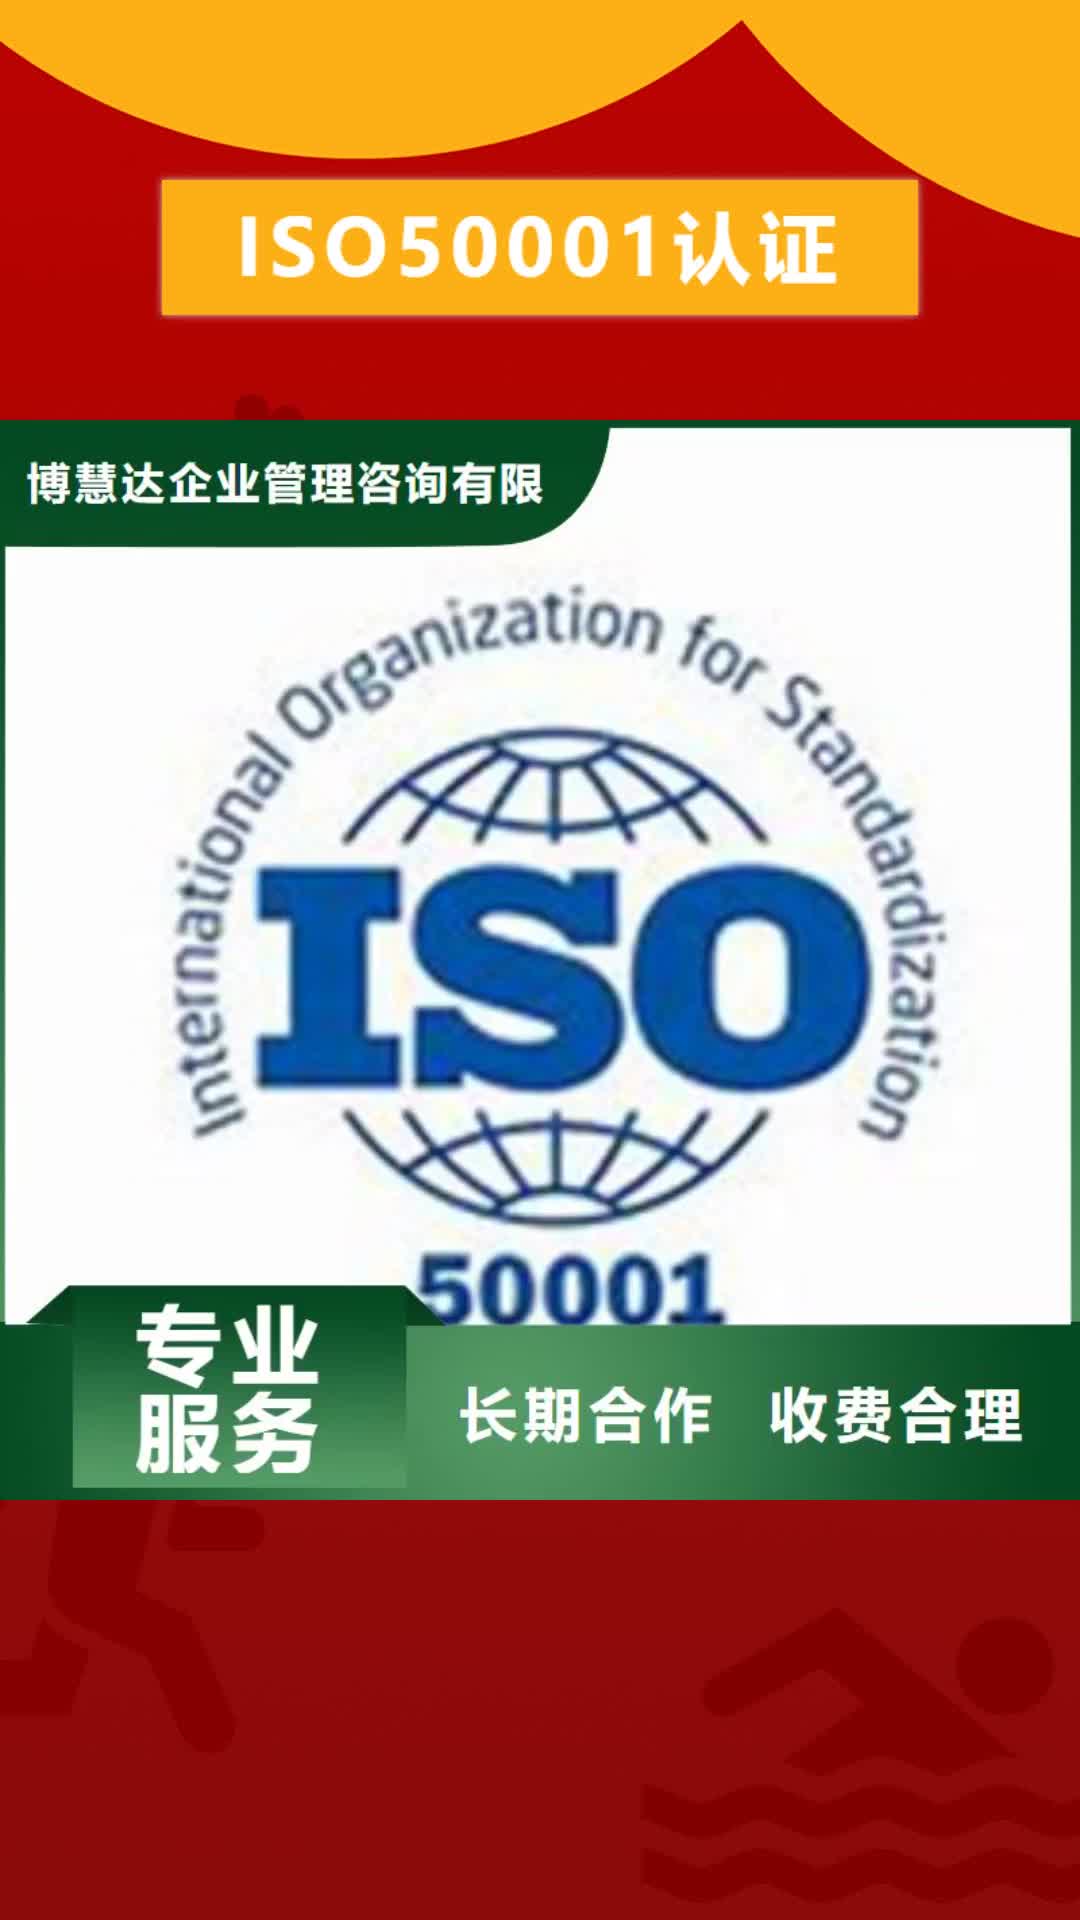 潍坊【ISO50001认证】ISO14000\ESD防静电认证收费合理